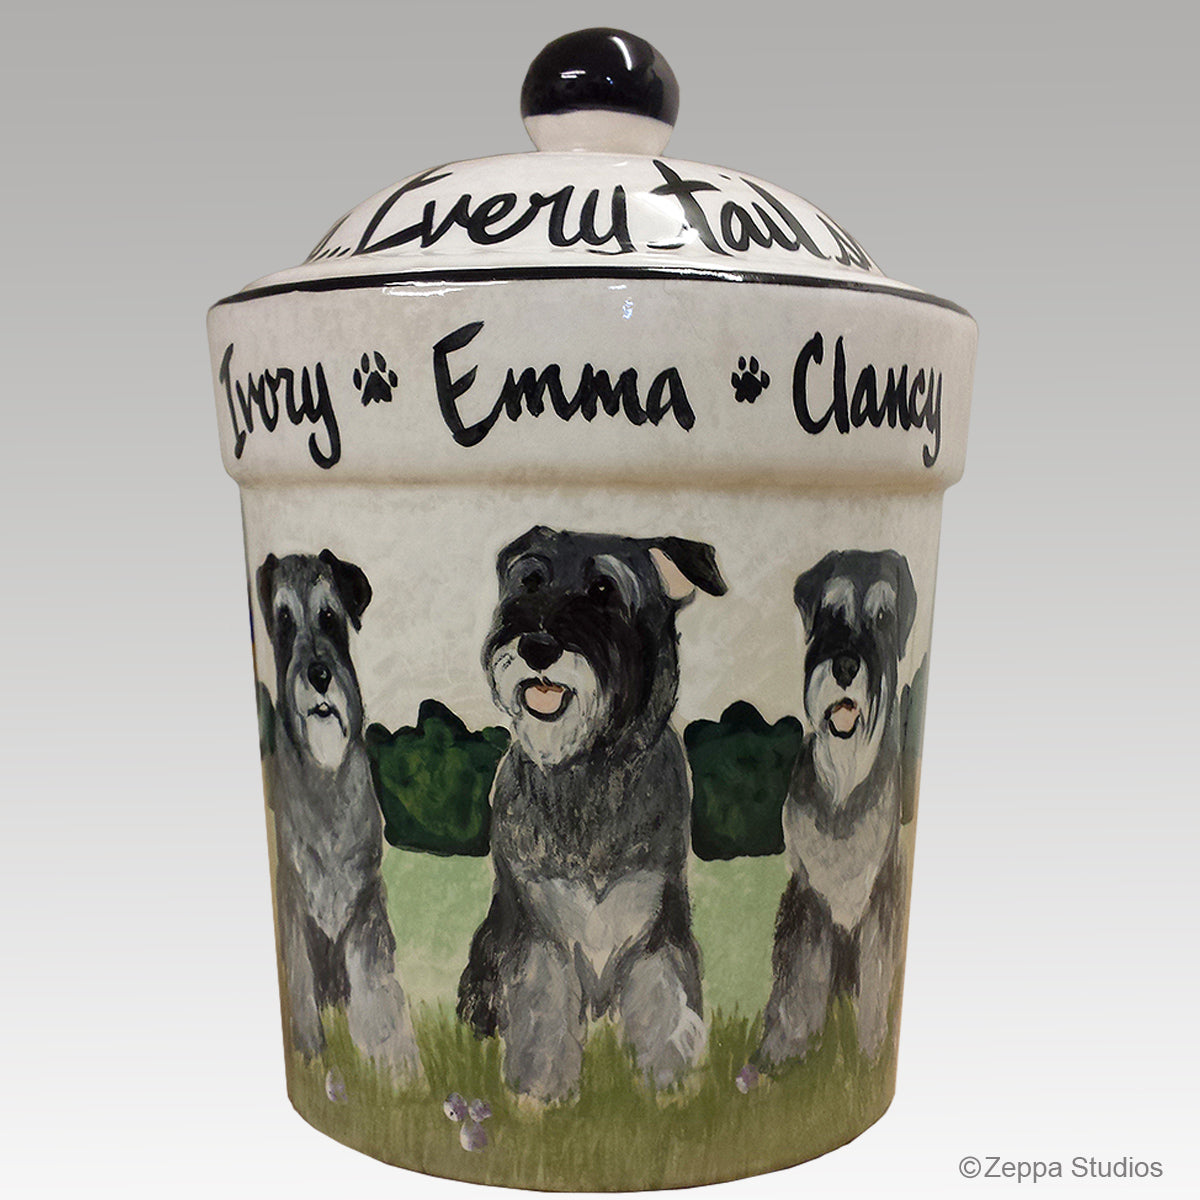 Three Schnauzers hand painted on a ceramic treat jar by Zeppa Studios